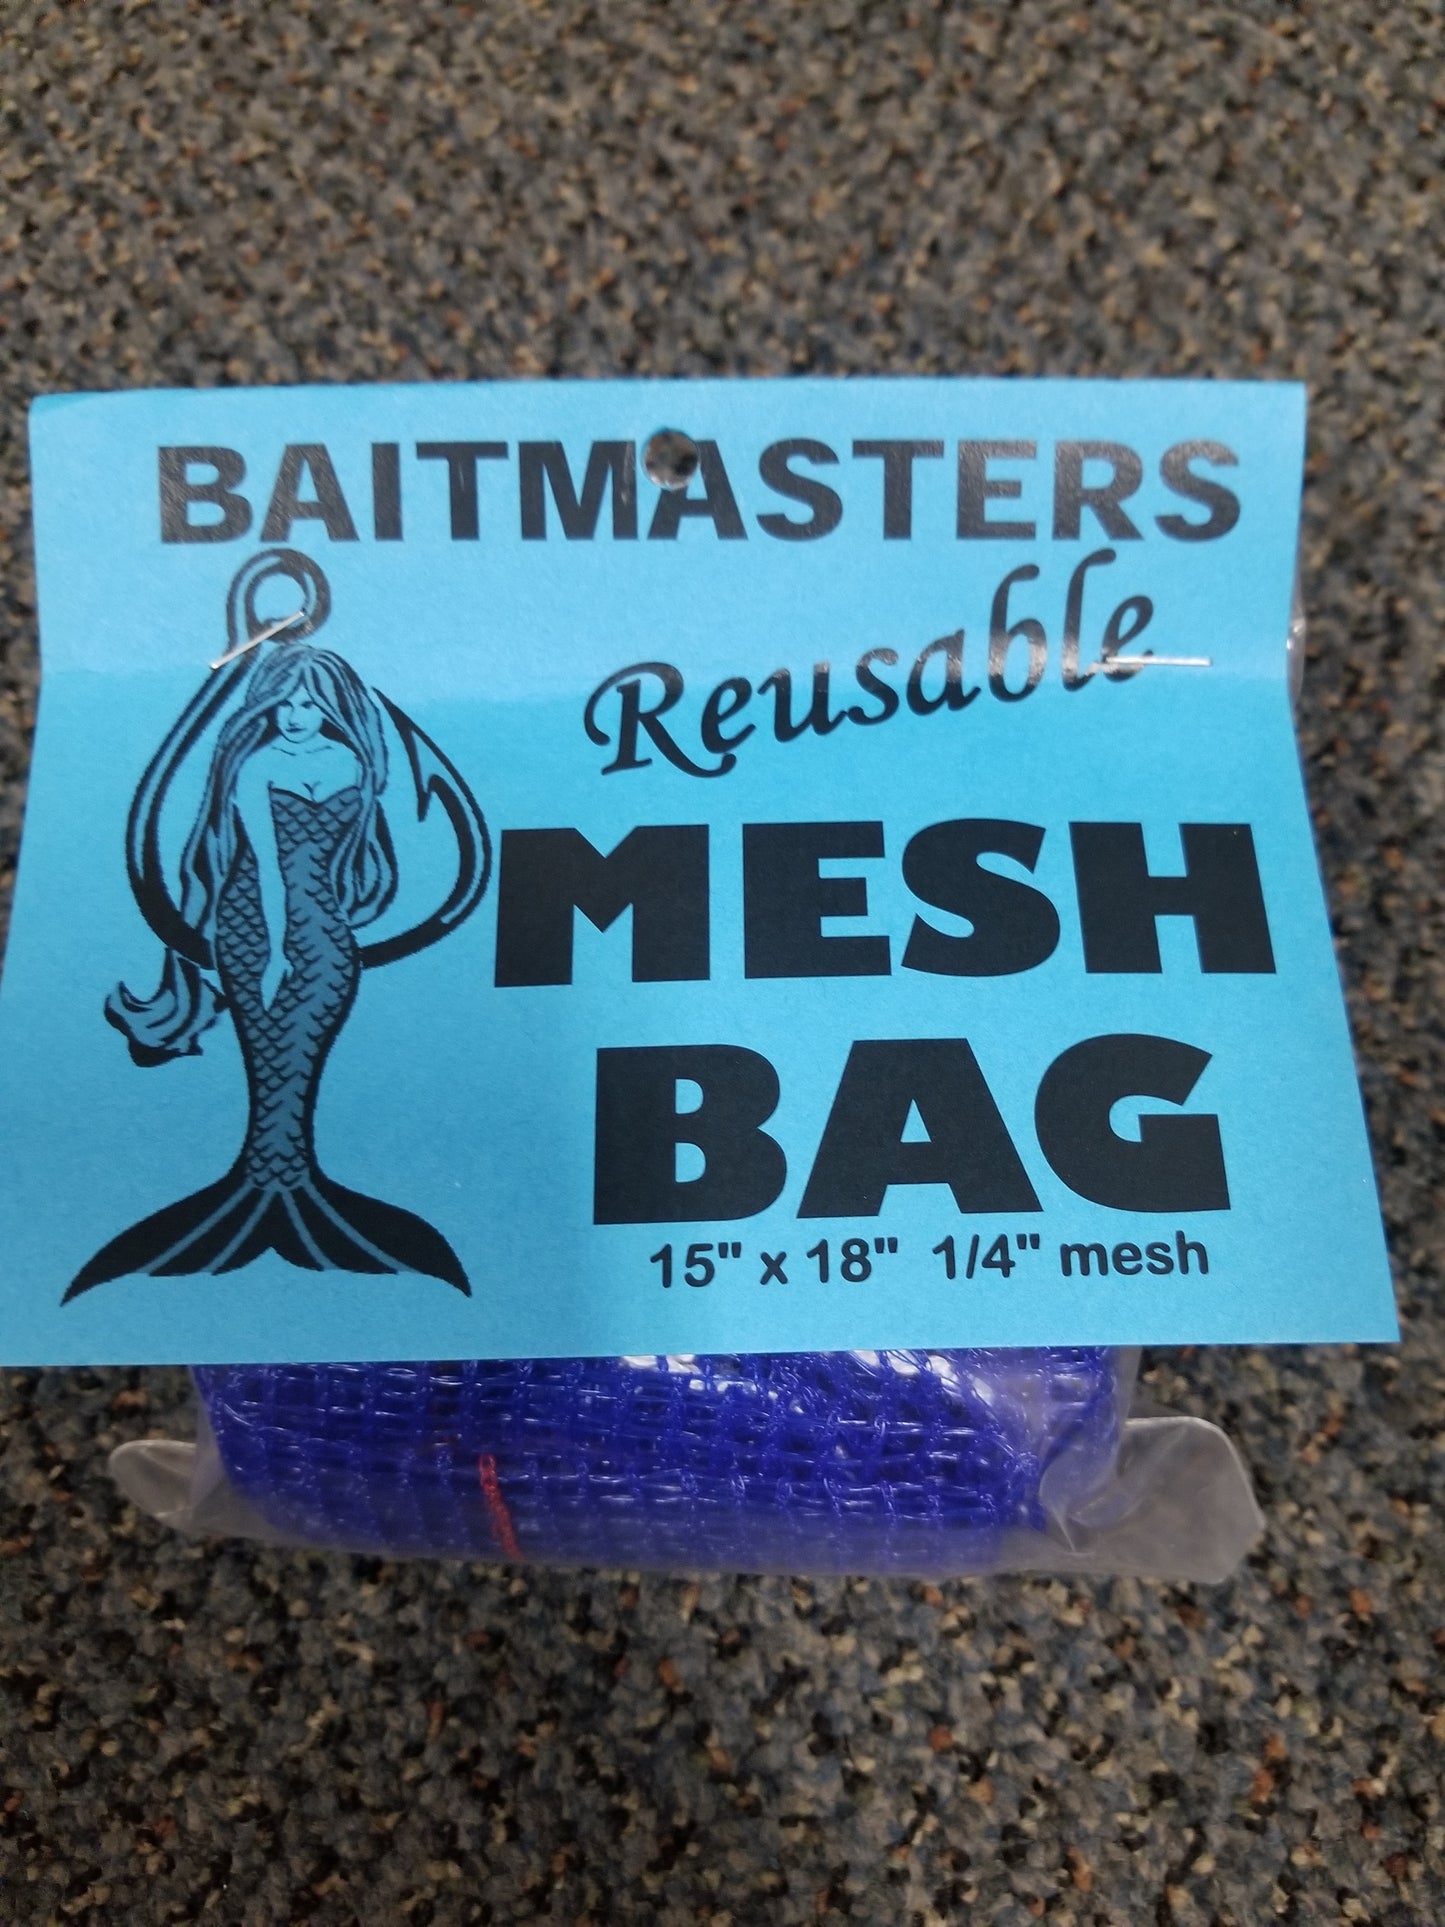 Baitmasters Reusable Mesh Chum Bag - Dogfish Tackle & Marine